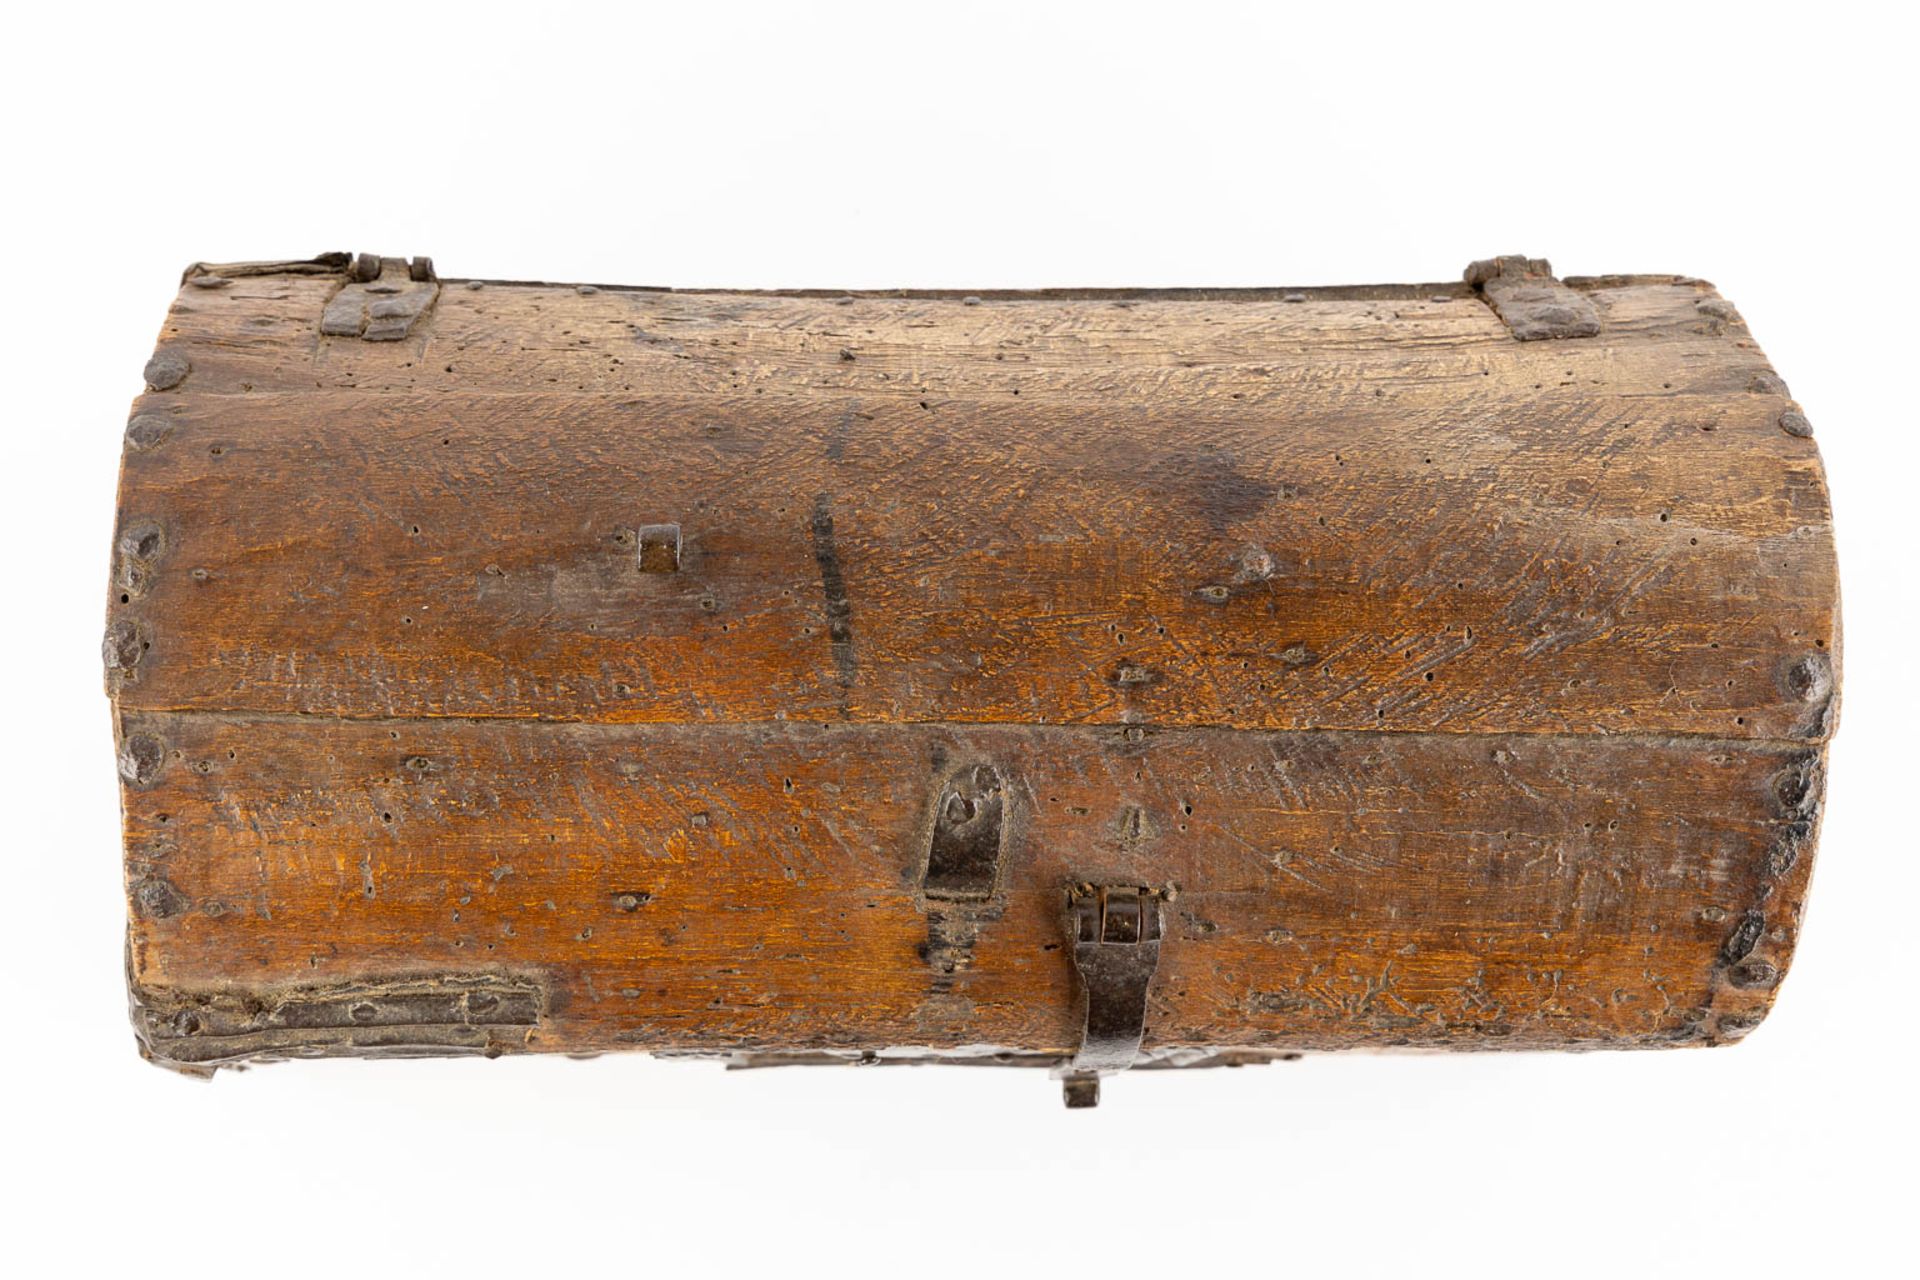 An antique money box or storage chest, wood and wrought iron, 16th/17th C. (L:20 x W:36 x H:22 cm) - Bild 7 aus 14